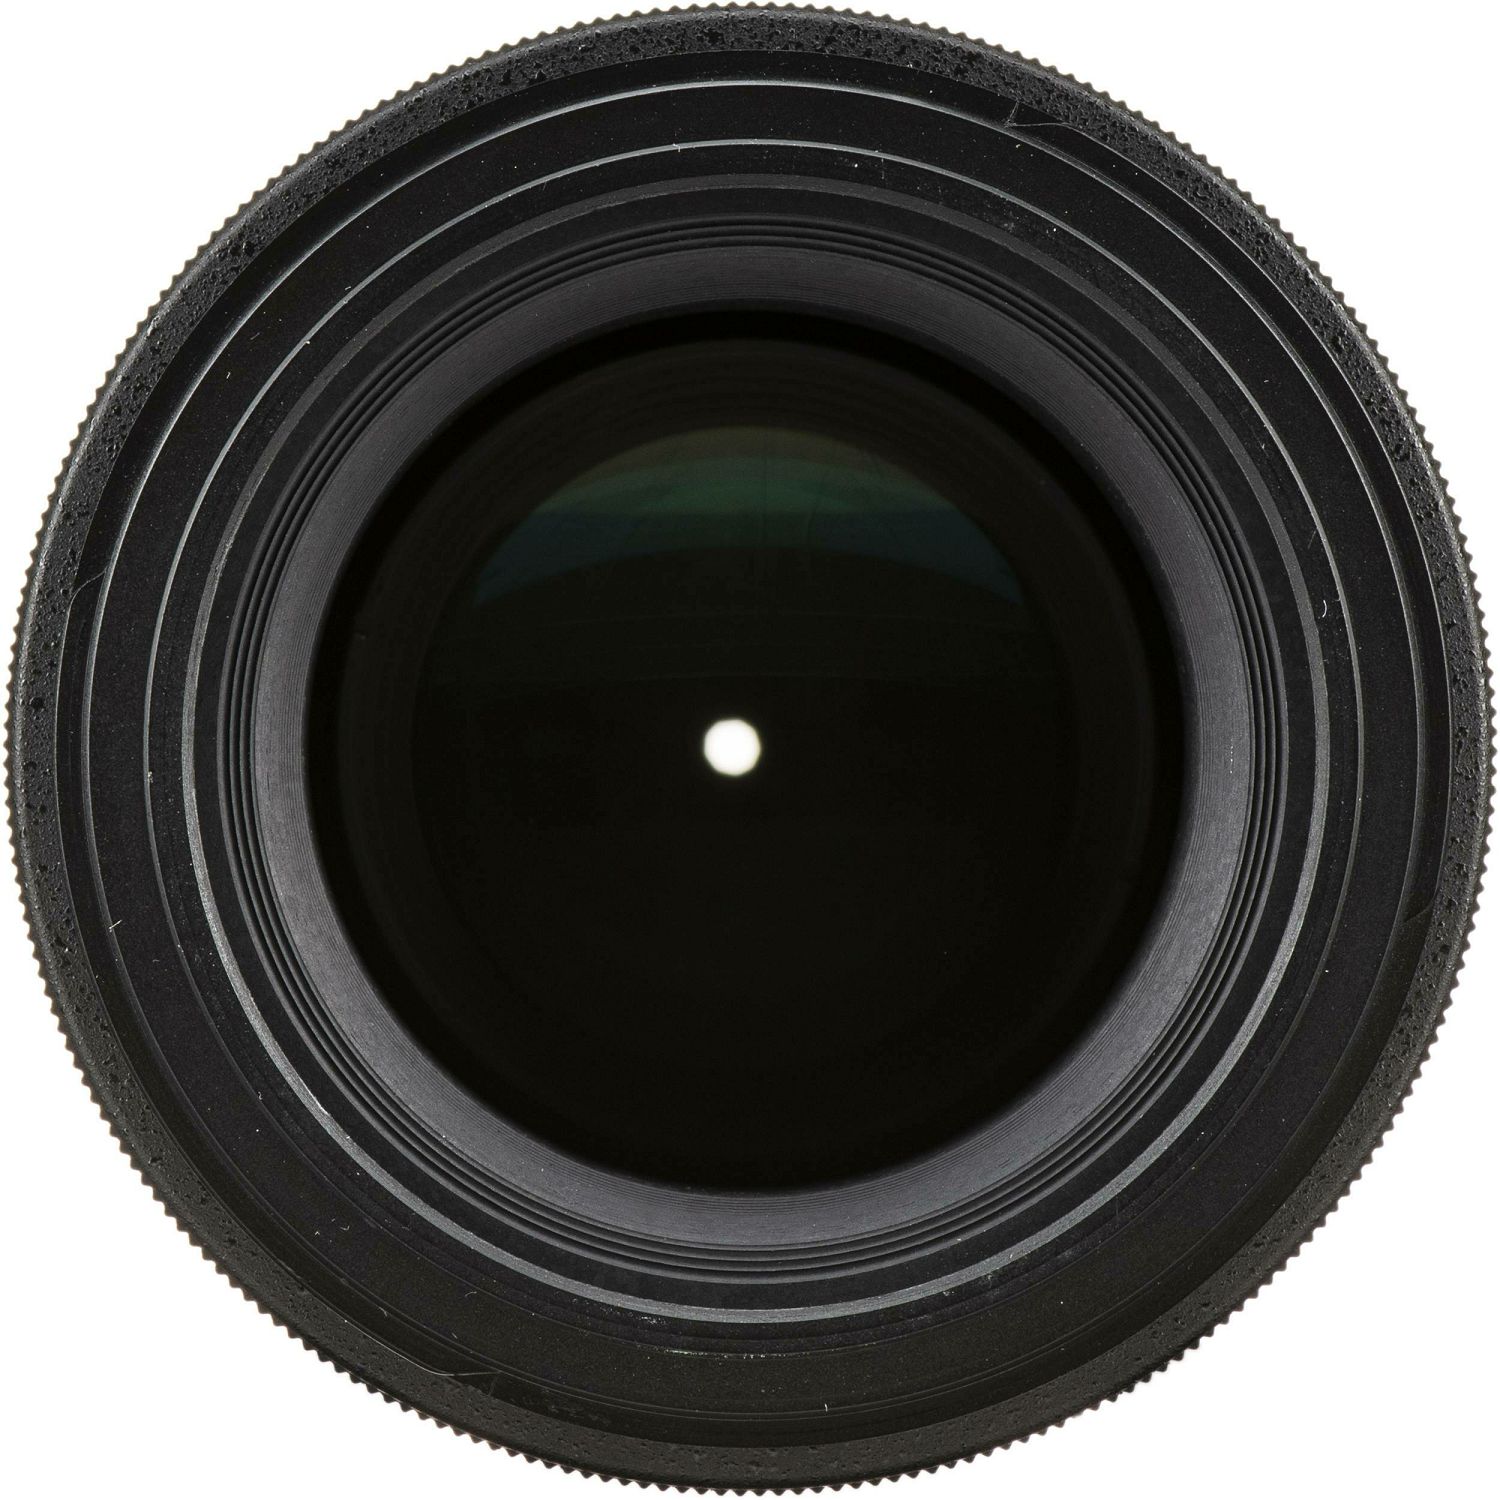 Tokina ATX-i 100mm f/2.8 FF Macro objektiv za Canon EF (T510001iC)